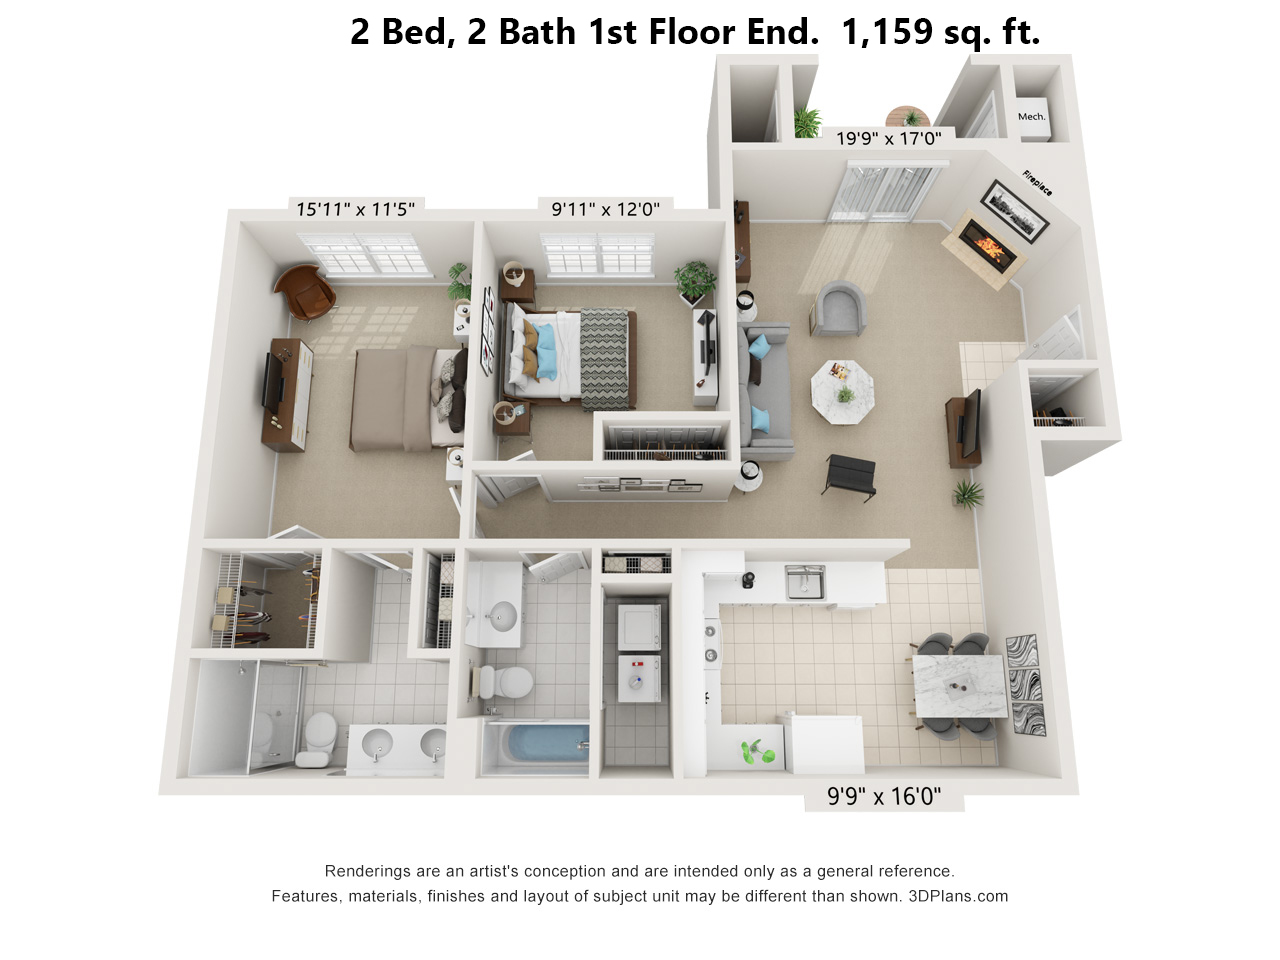 2 Bedroom, 2 Bath first floor end unit floorplan 1,159 sq. ft.